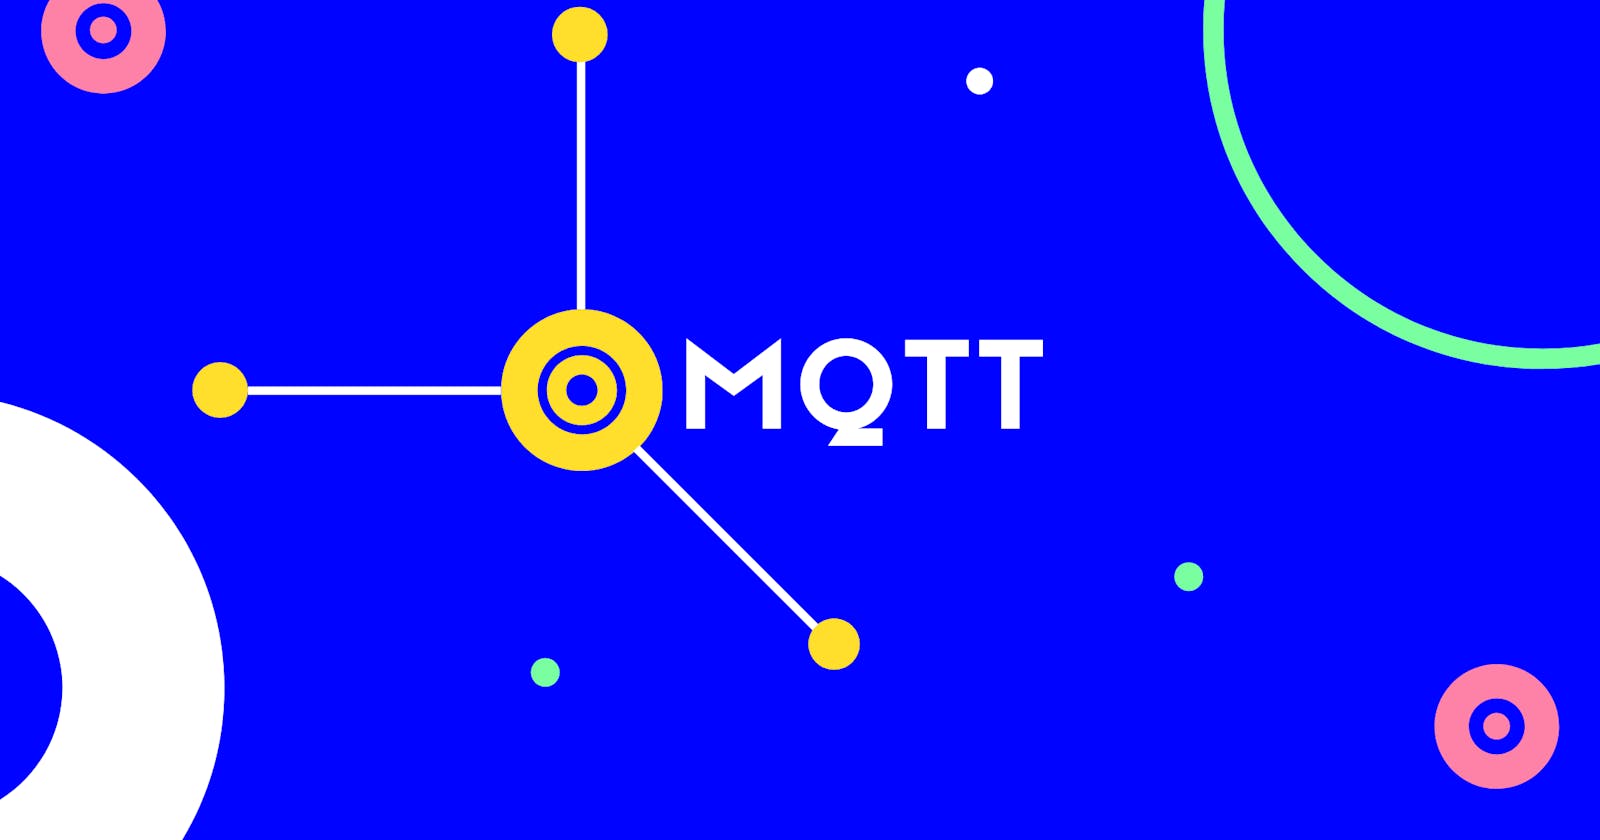 IoT basics : Introduction to MQTT Protocol